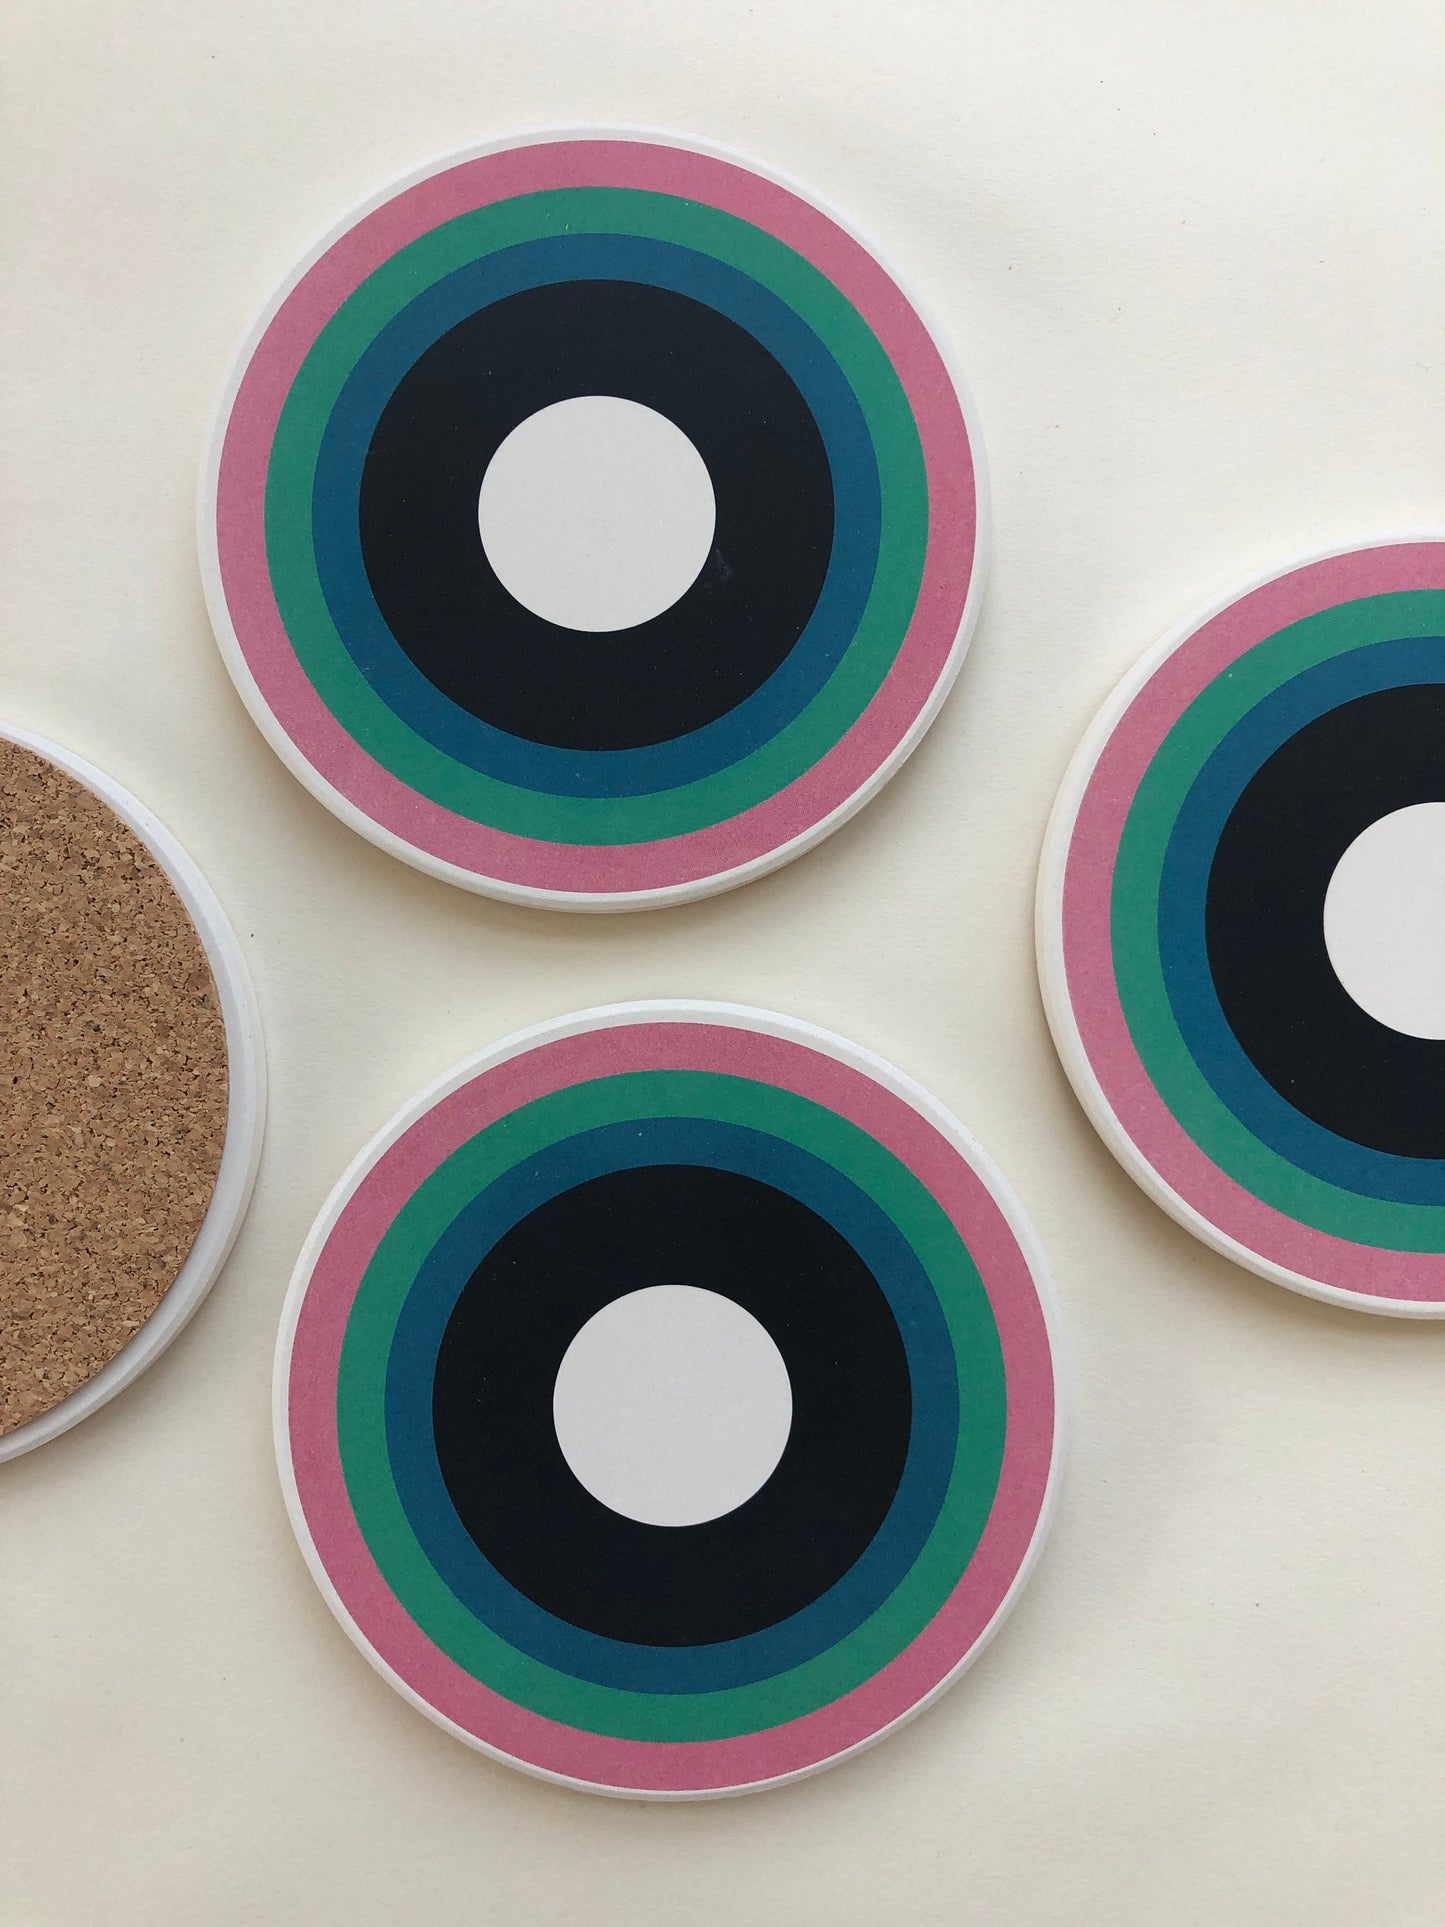 ORBIT COASTERS set of 4 ceramic absorbent coasters